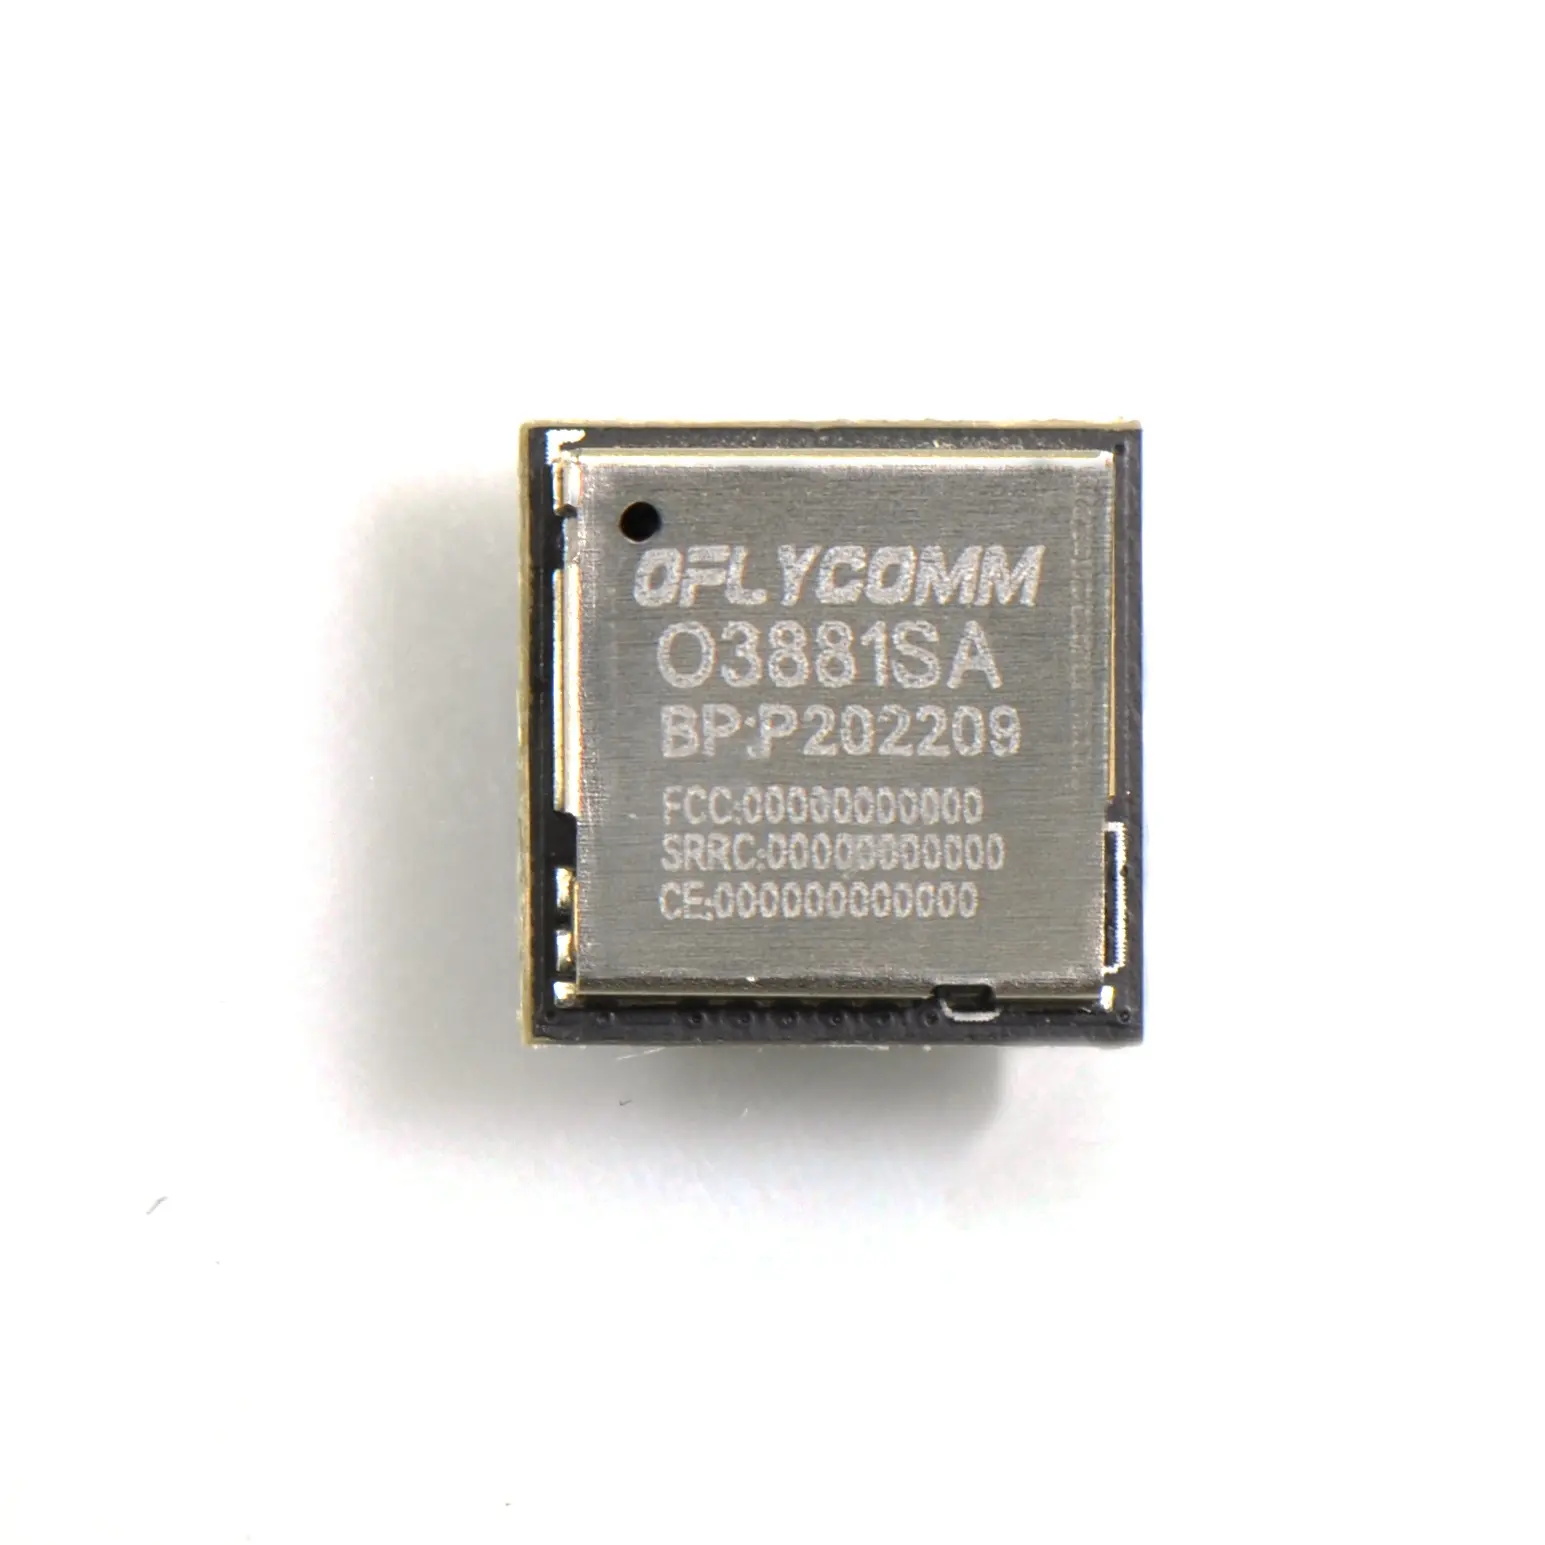 OFLYCOMM O3881S 2.4g module audio sans fil sdio2.0 HI3881 module wifi sans fil, vente en gros